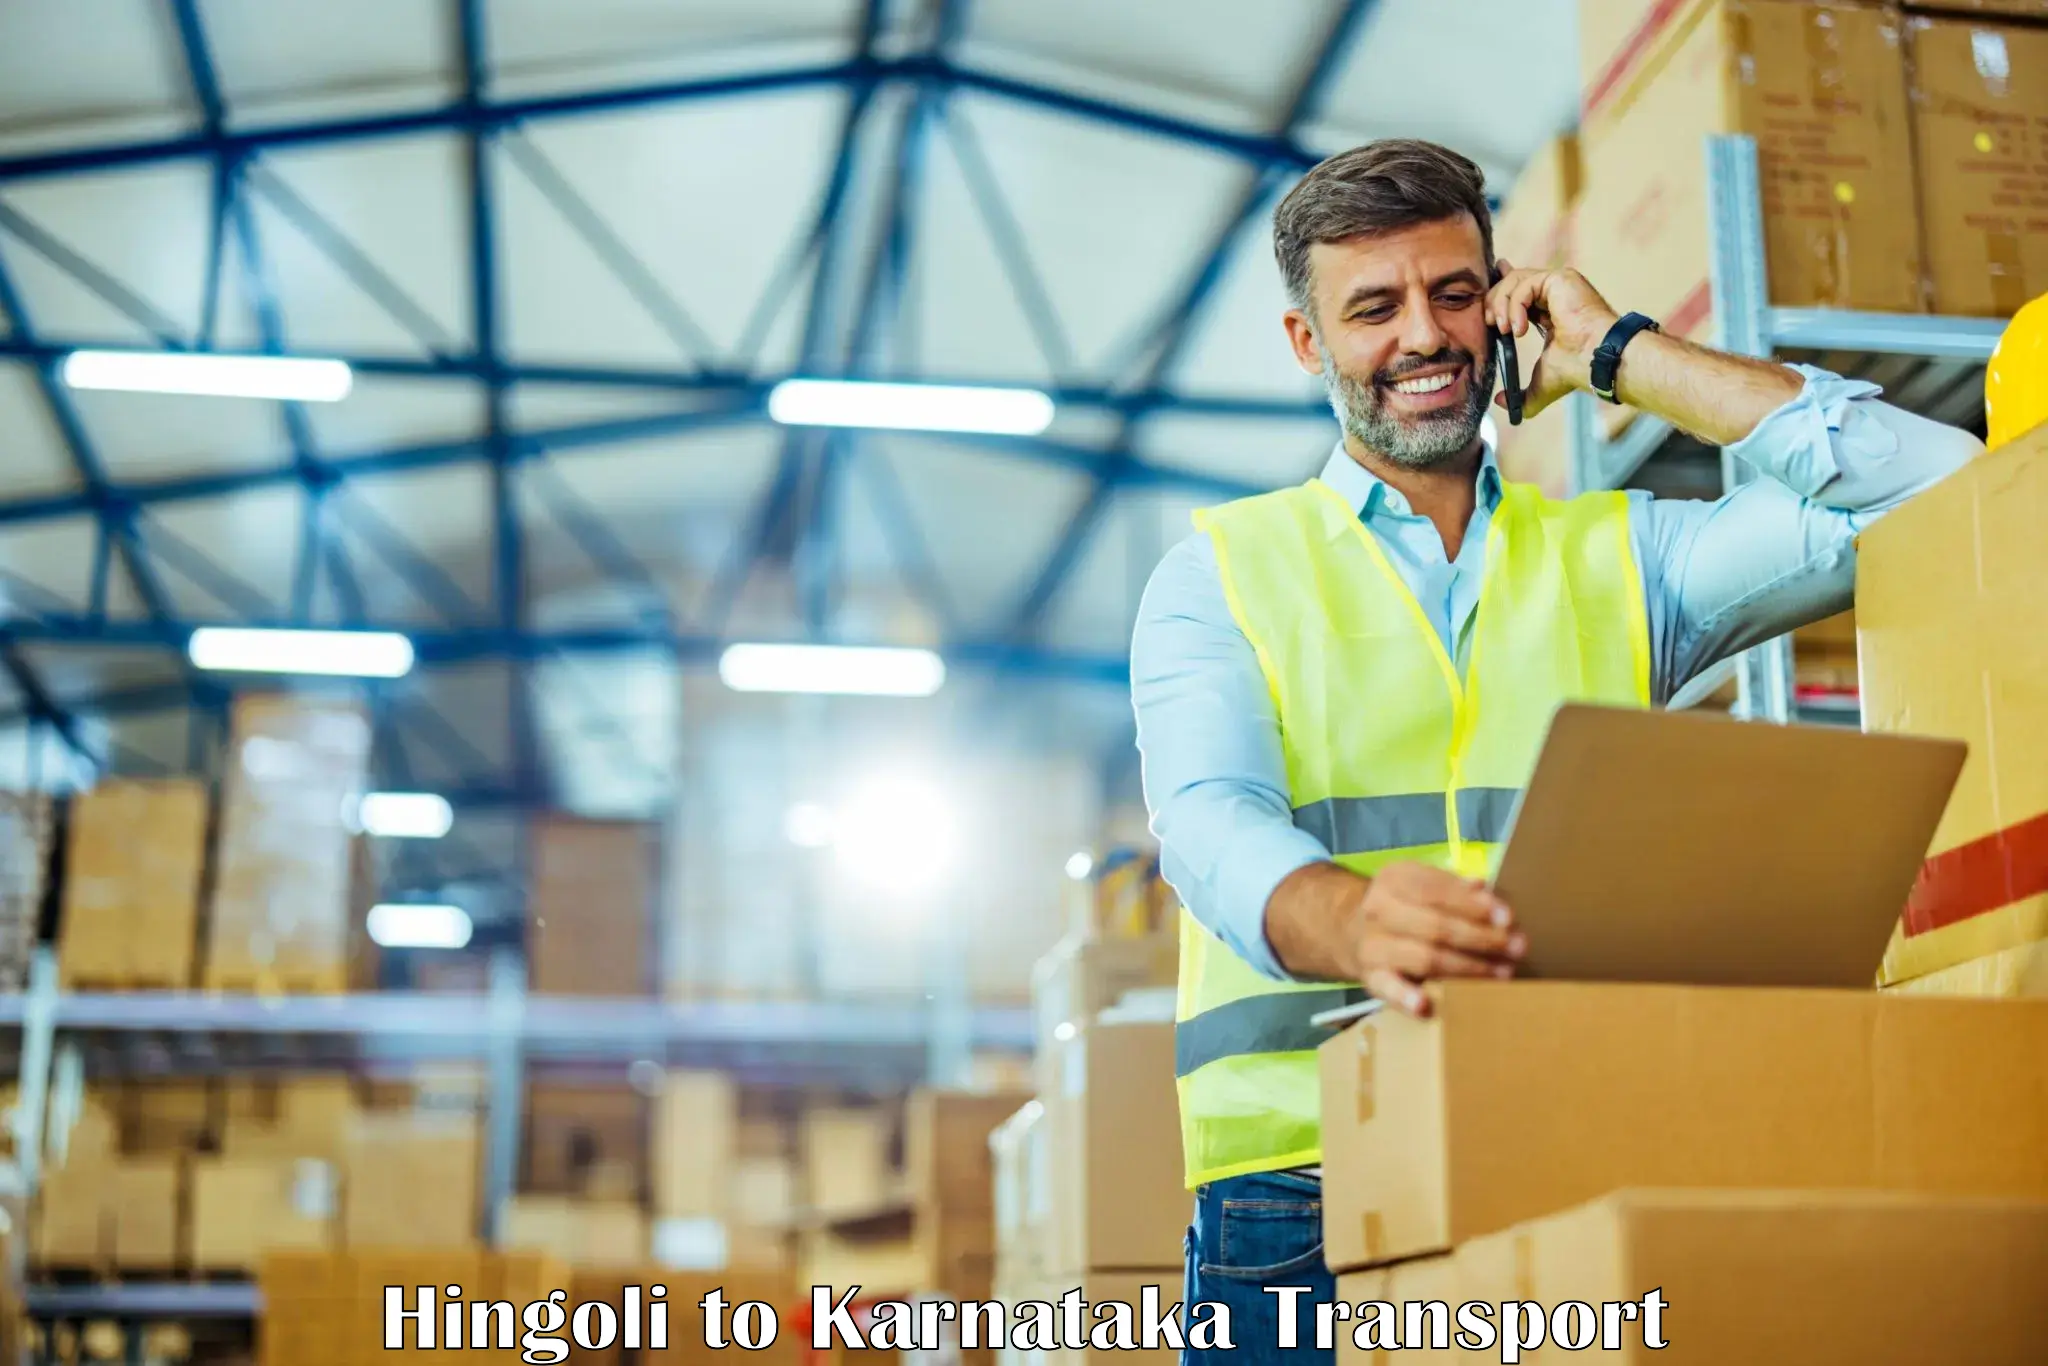 Delivery service Hingoli to Nelamangala